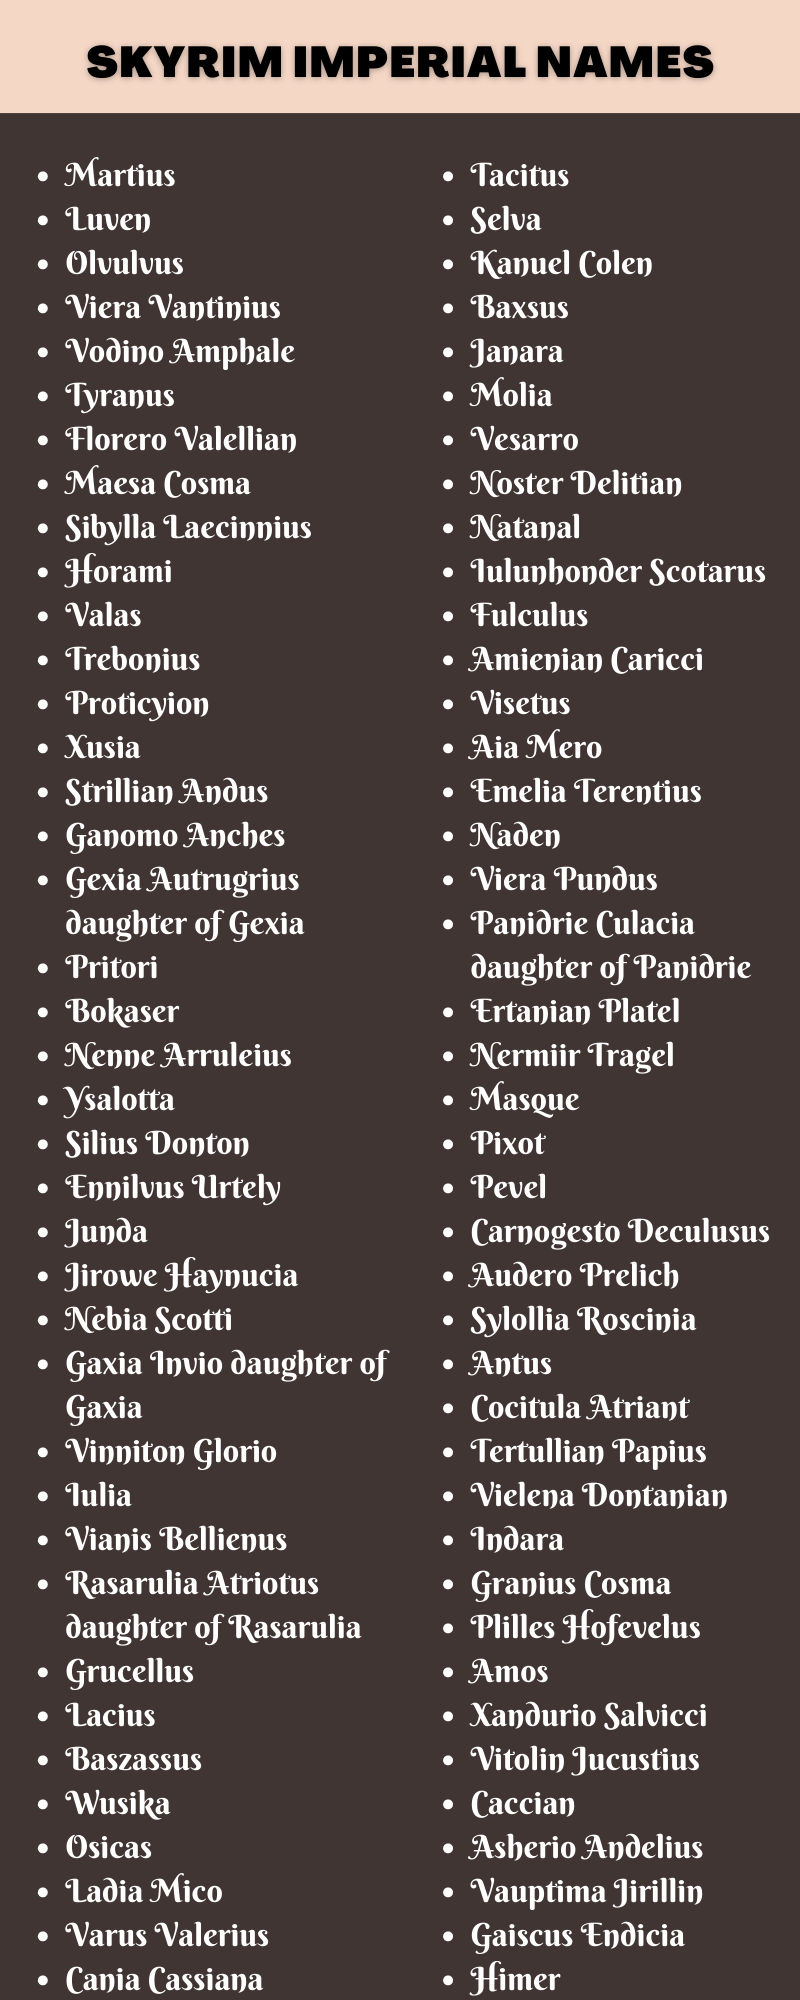 Skyrim Imperial Names